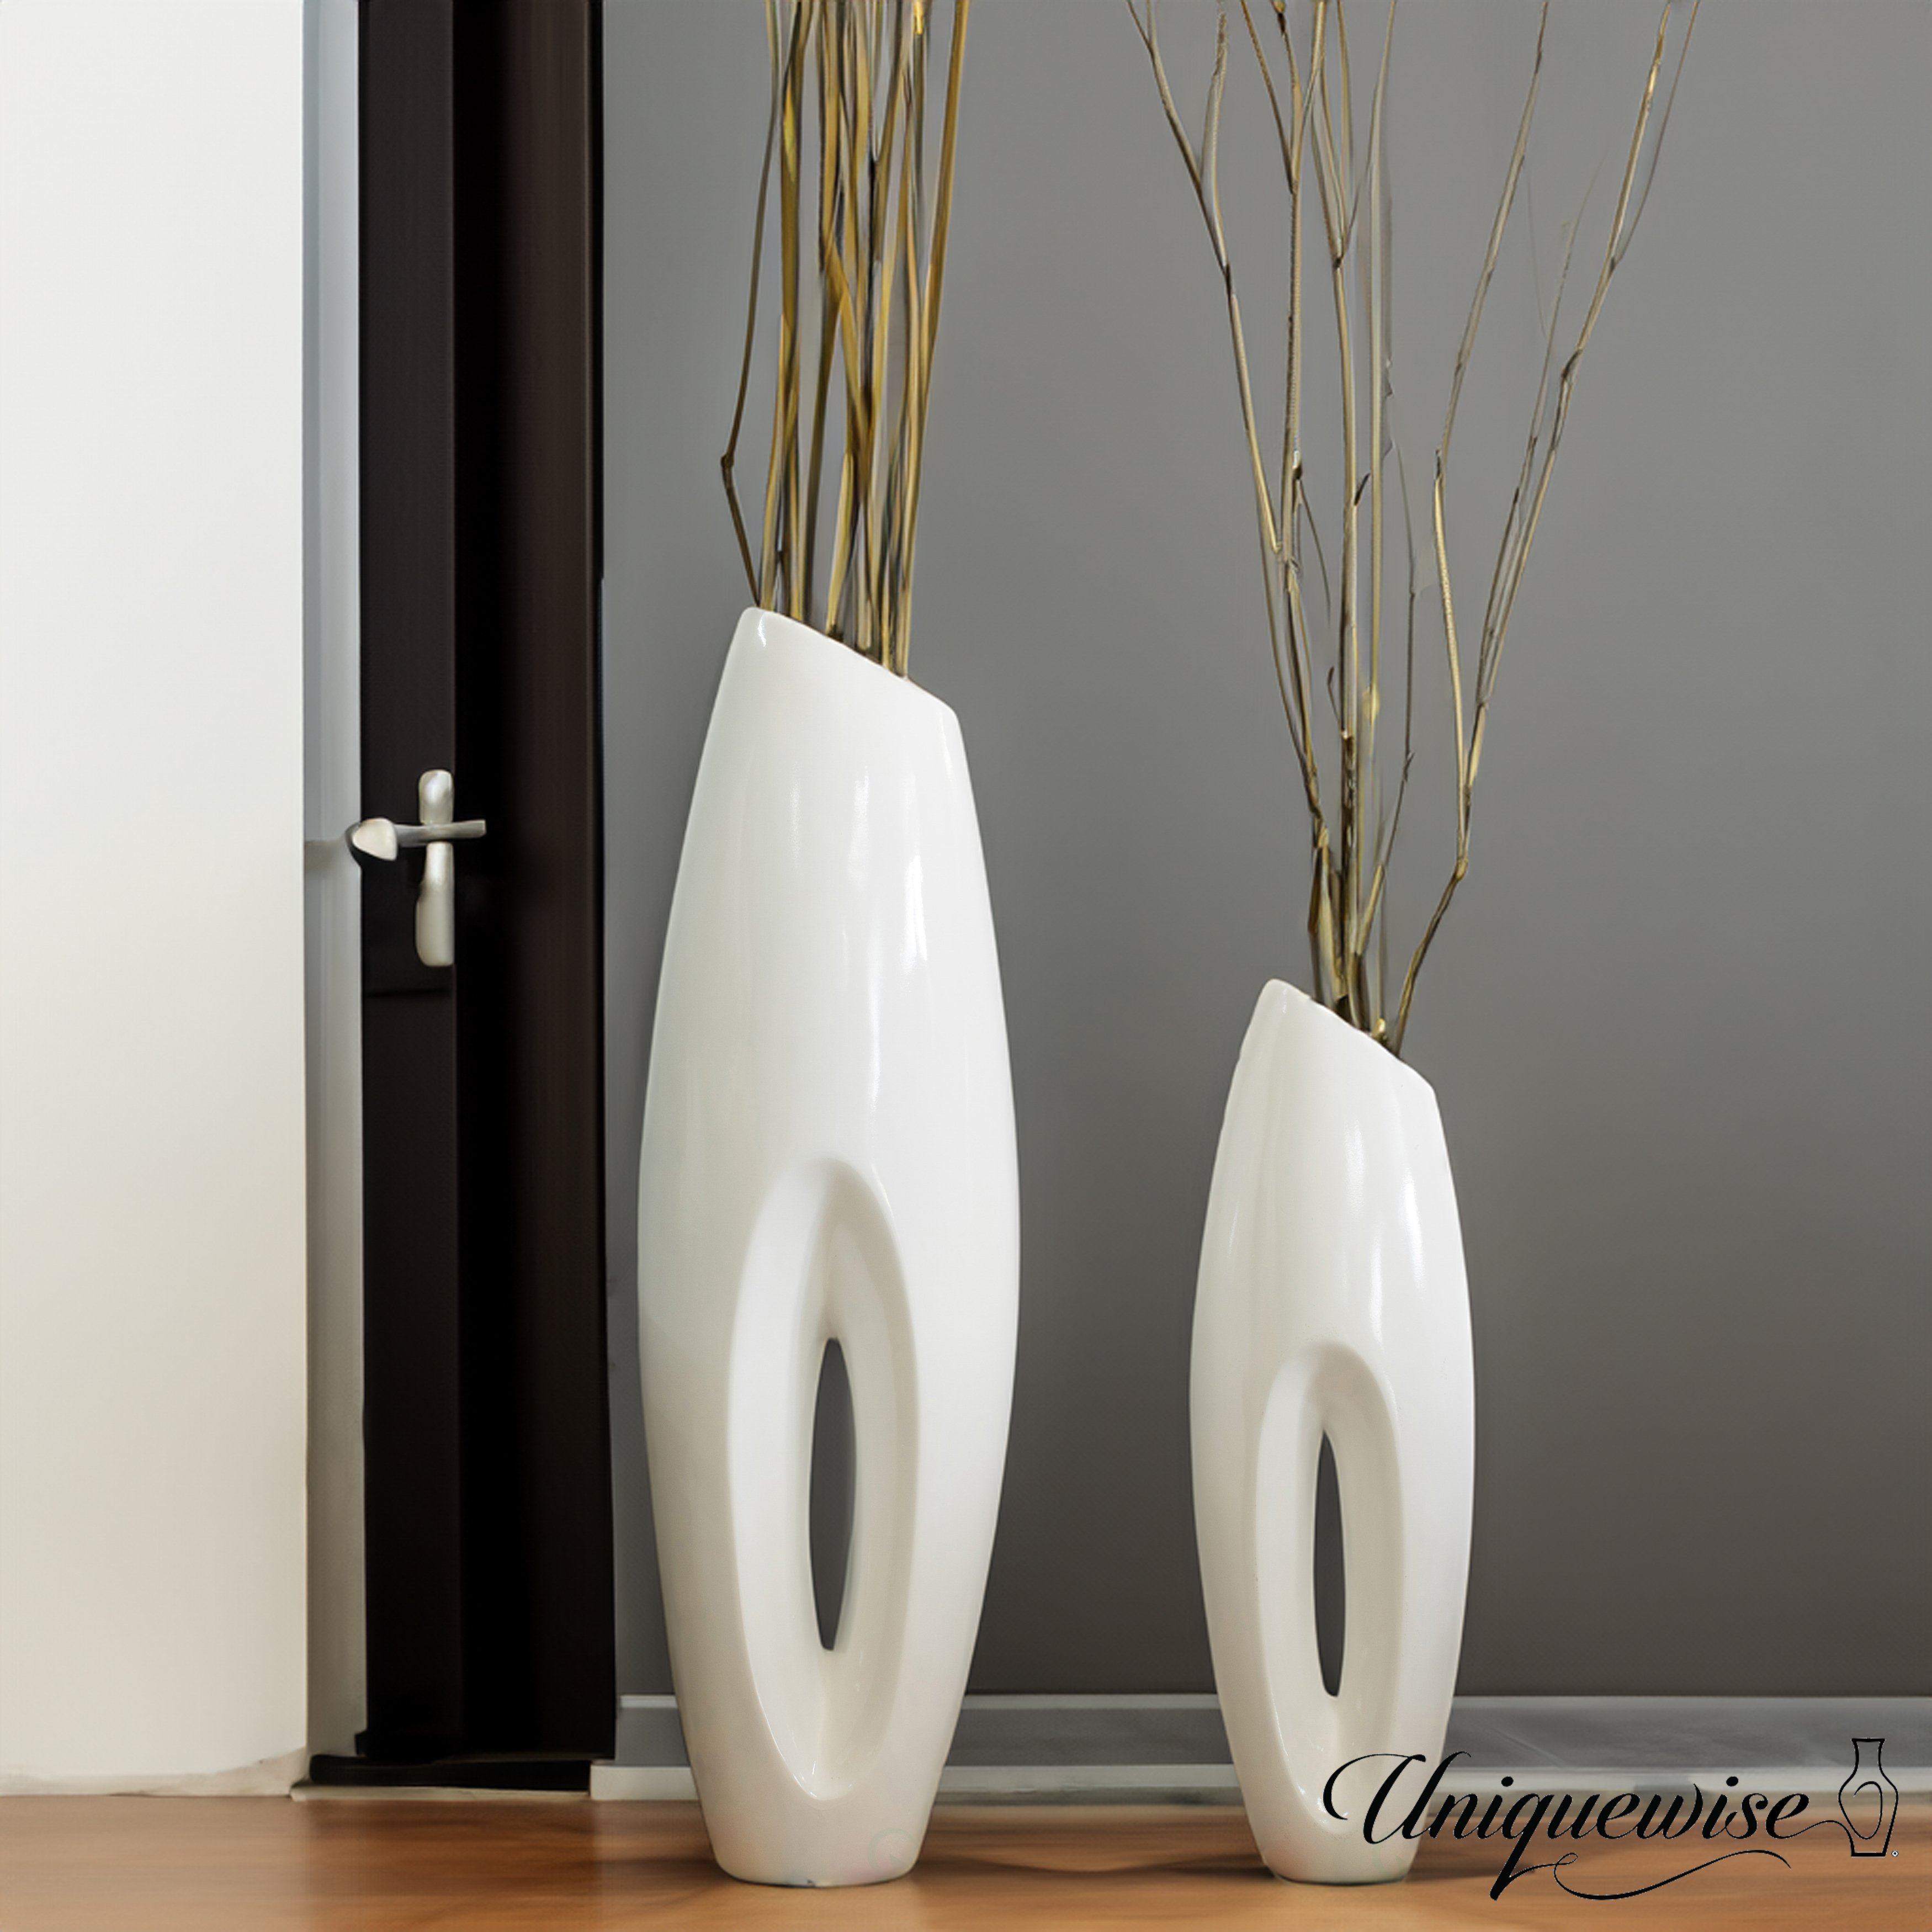 Tall Floor Vase, Modern White Large Floor Vase, Decorative Lightweight Vase, For The Entryway, Dining Room, Living Room - Large